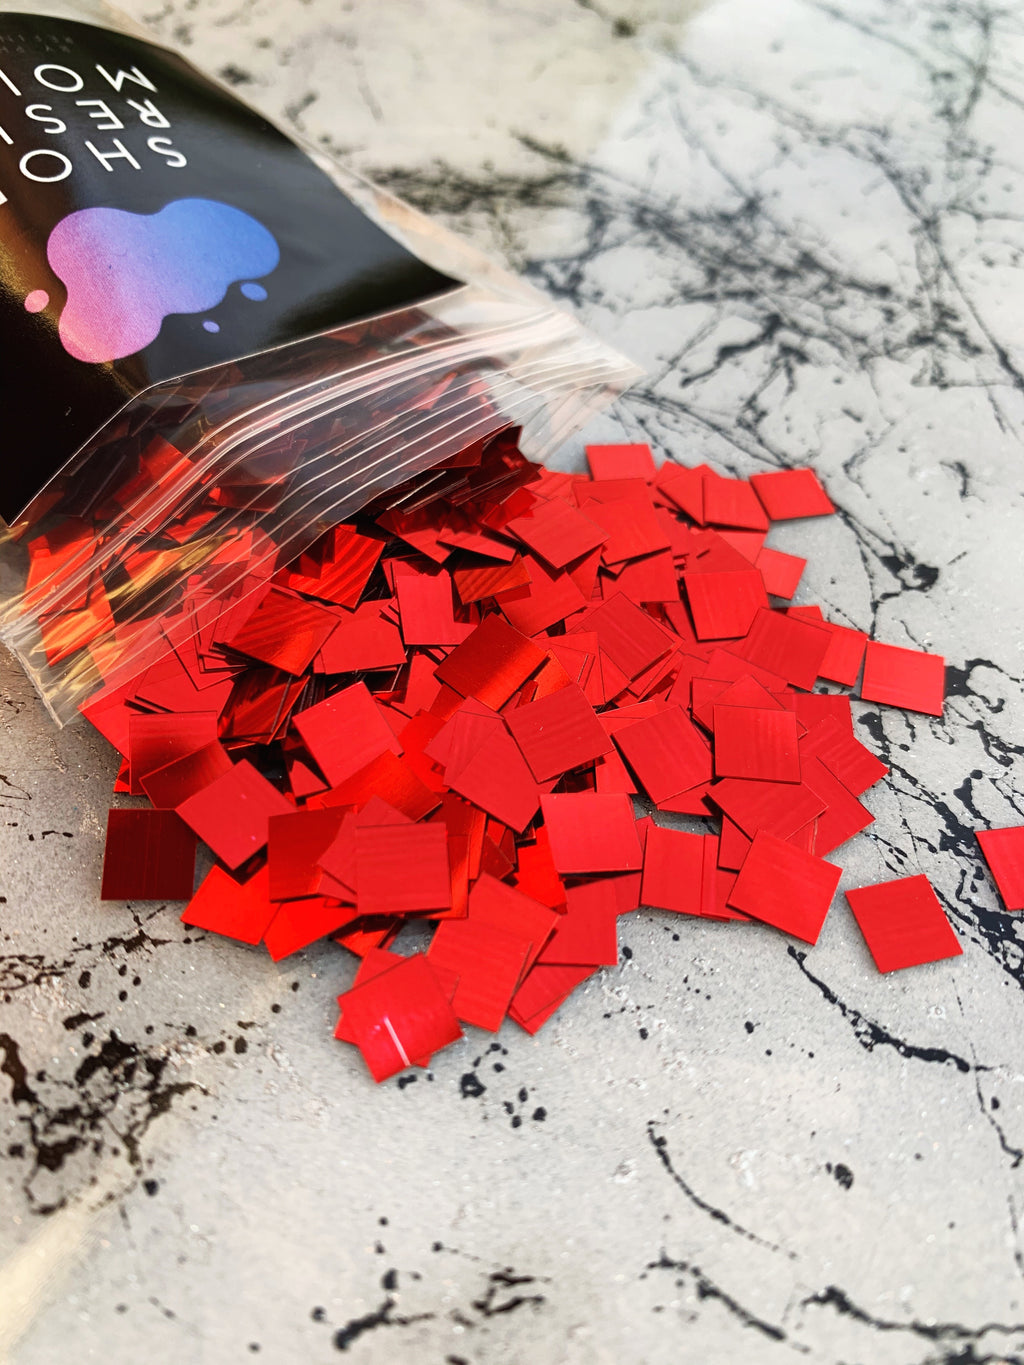 Red Fine Glitter – New Classic Resin